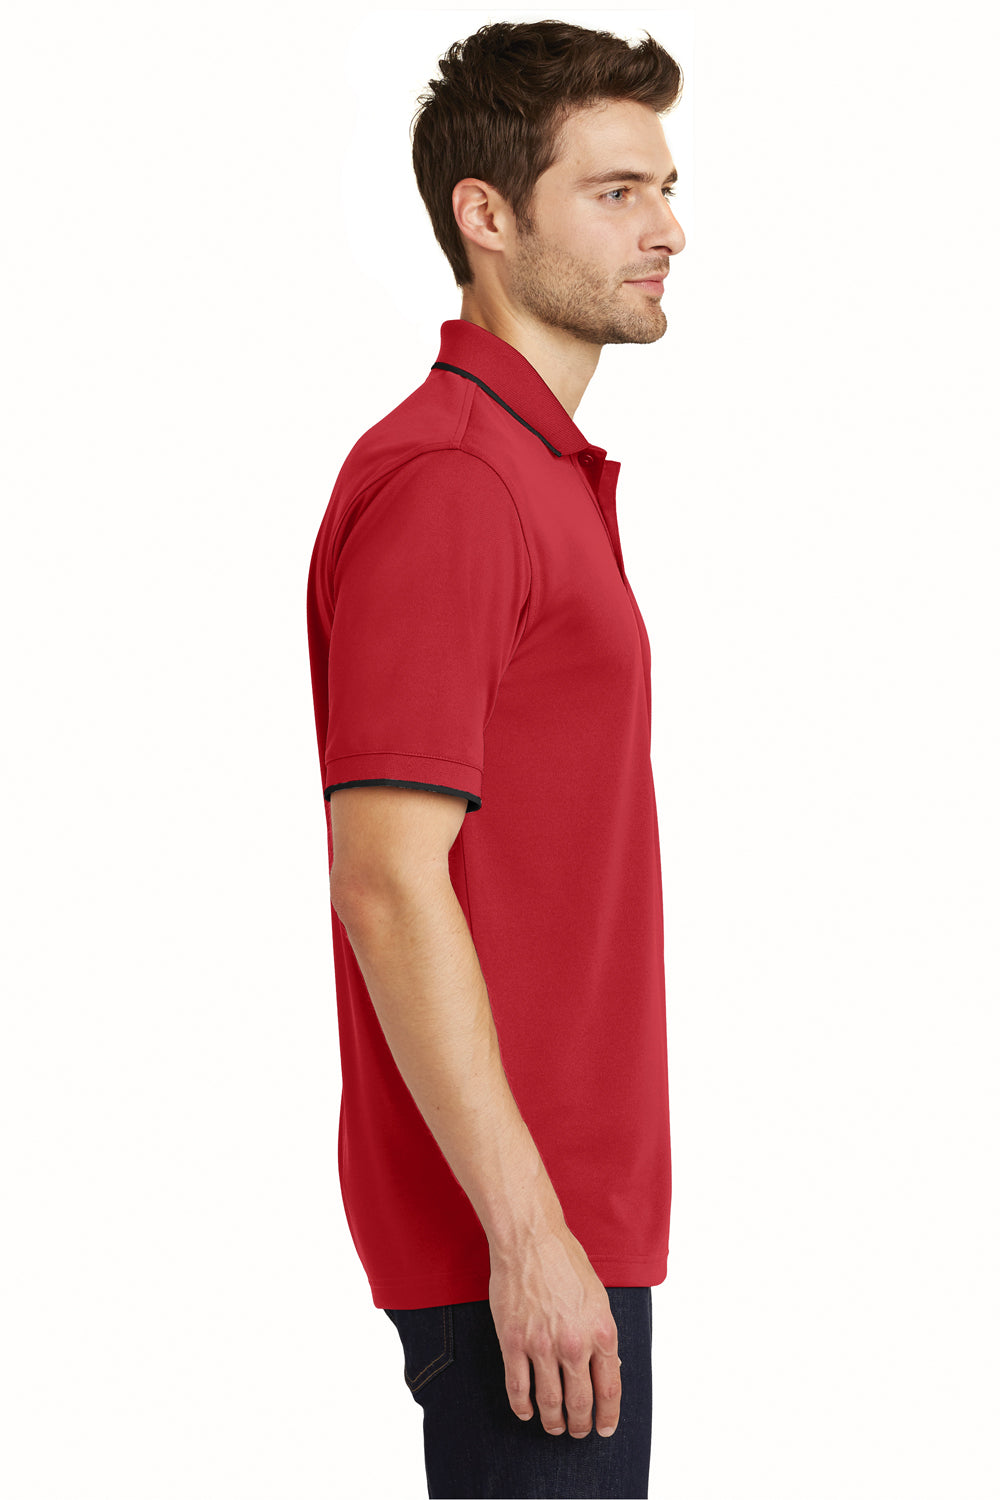 Port Authority K111 Mens Dry Zone Moisture Wicking Short Sleeve Polo Shirt Red/Black Side